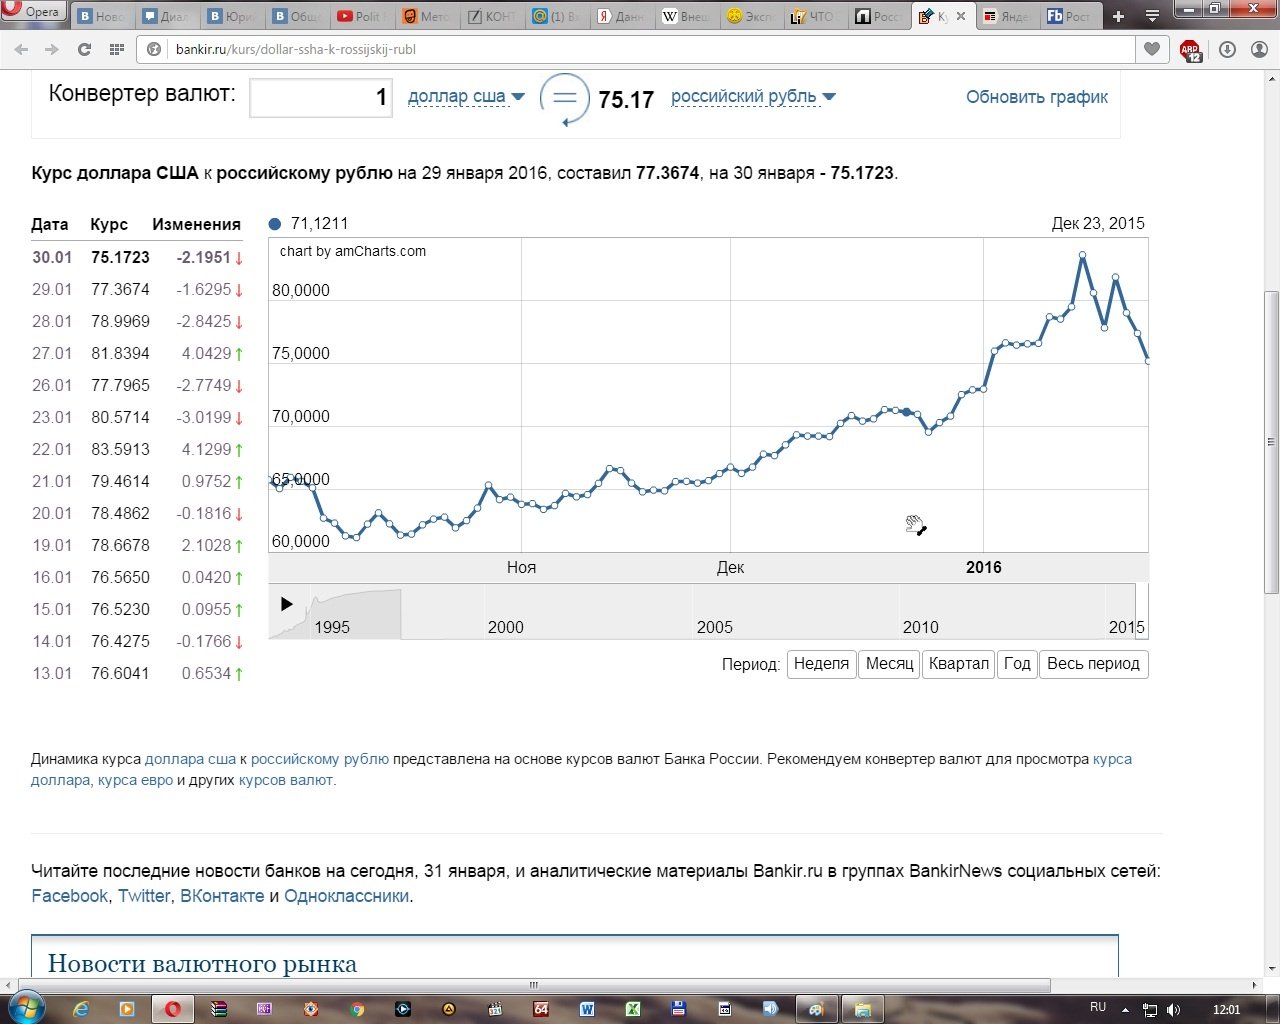 Курс евро в рф на дату. Курс рубля график. Курс доллара в 1995 году. Курс евро в 2005 году. Курс валют график.